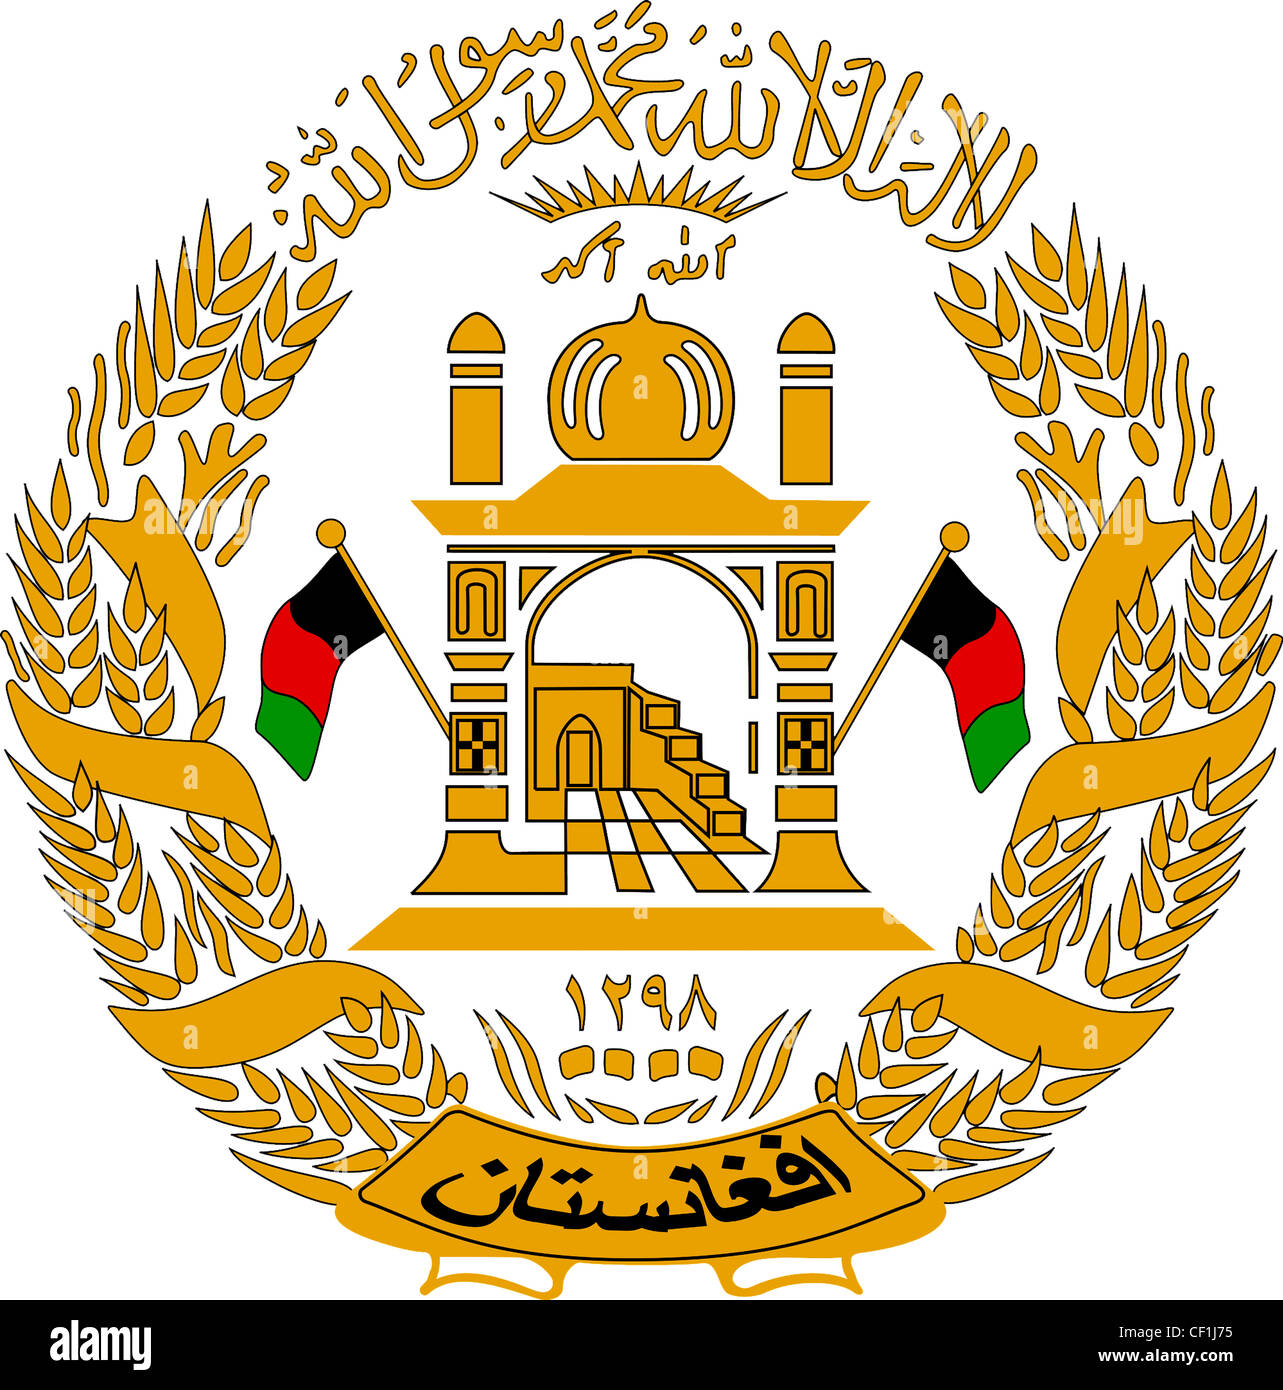 Wappen der islamischen Republik Afghanistan. Stockfoto